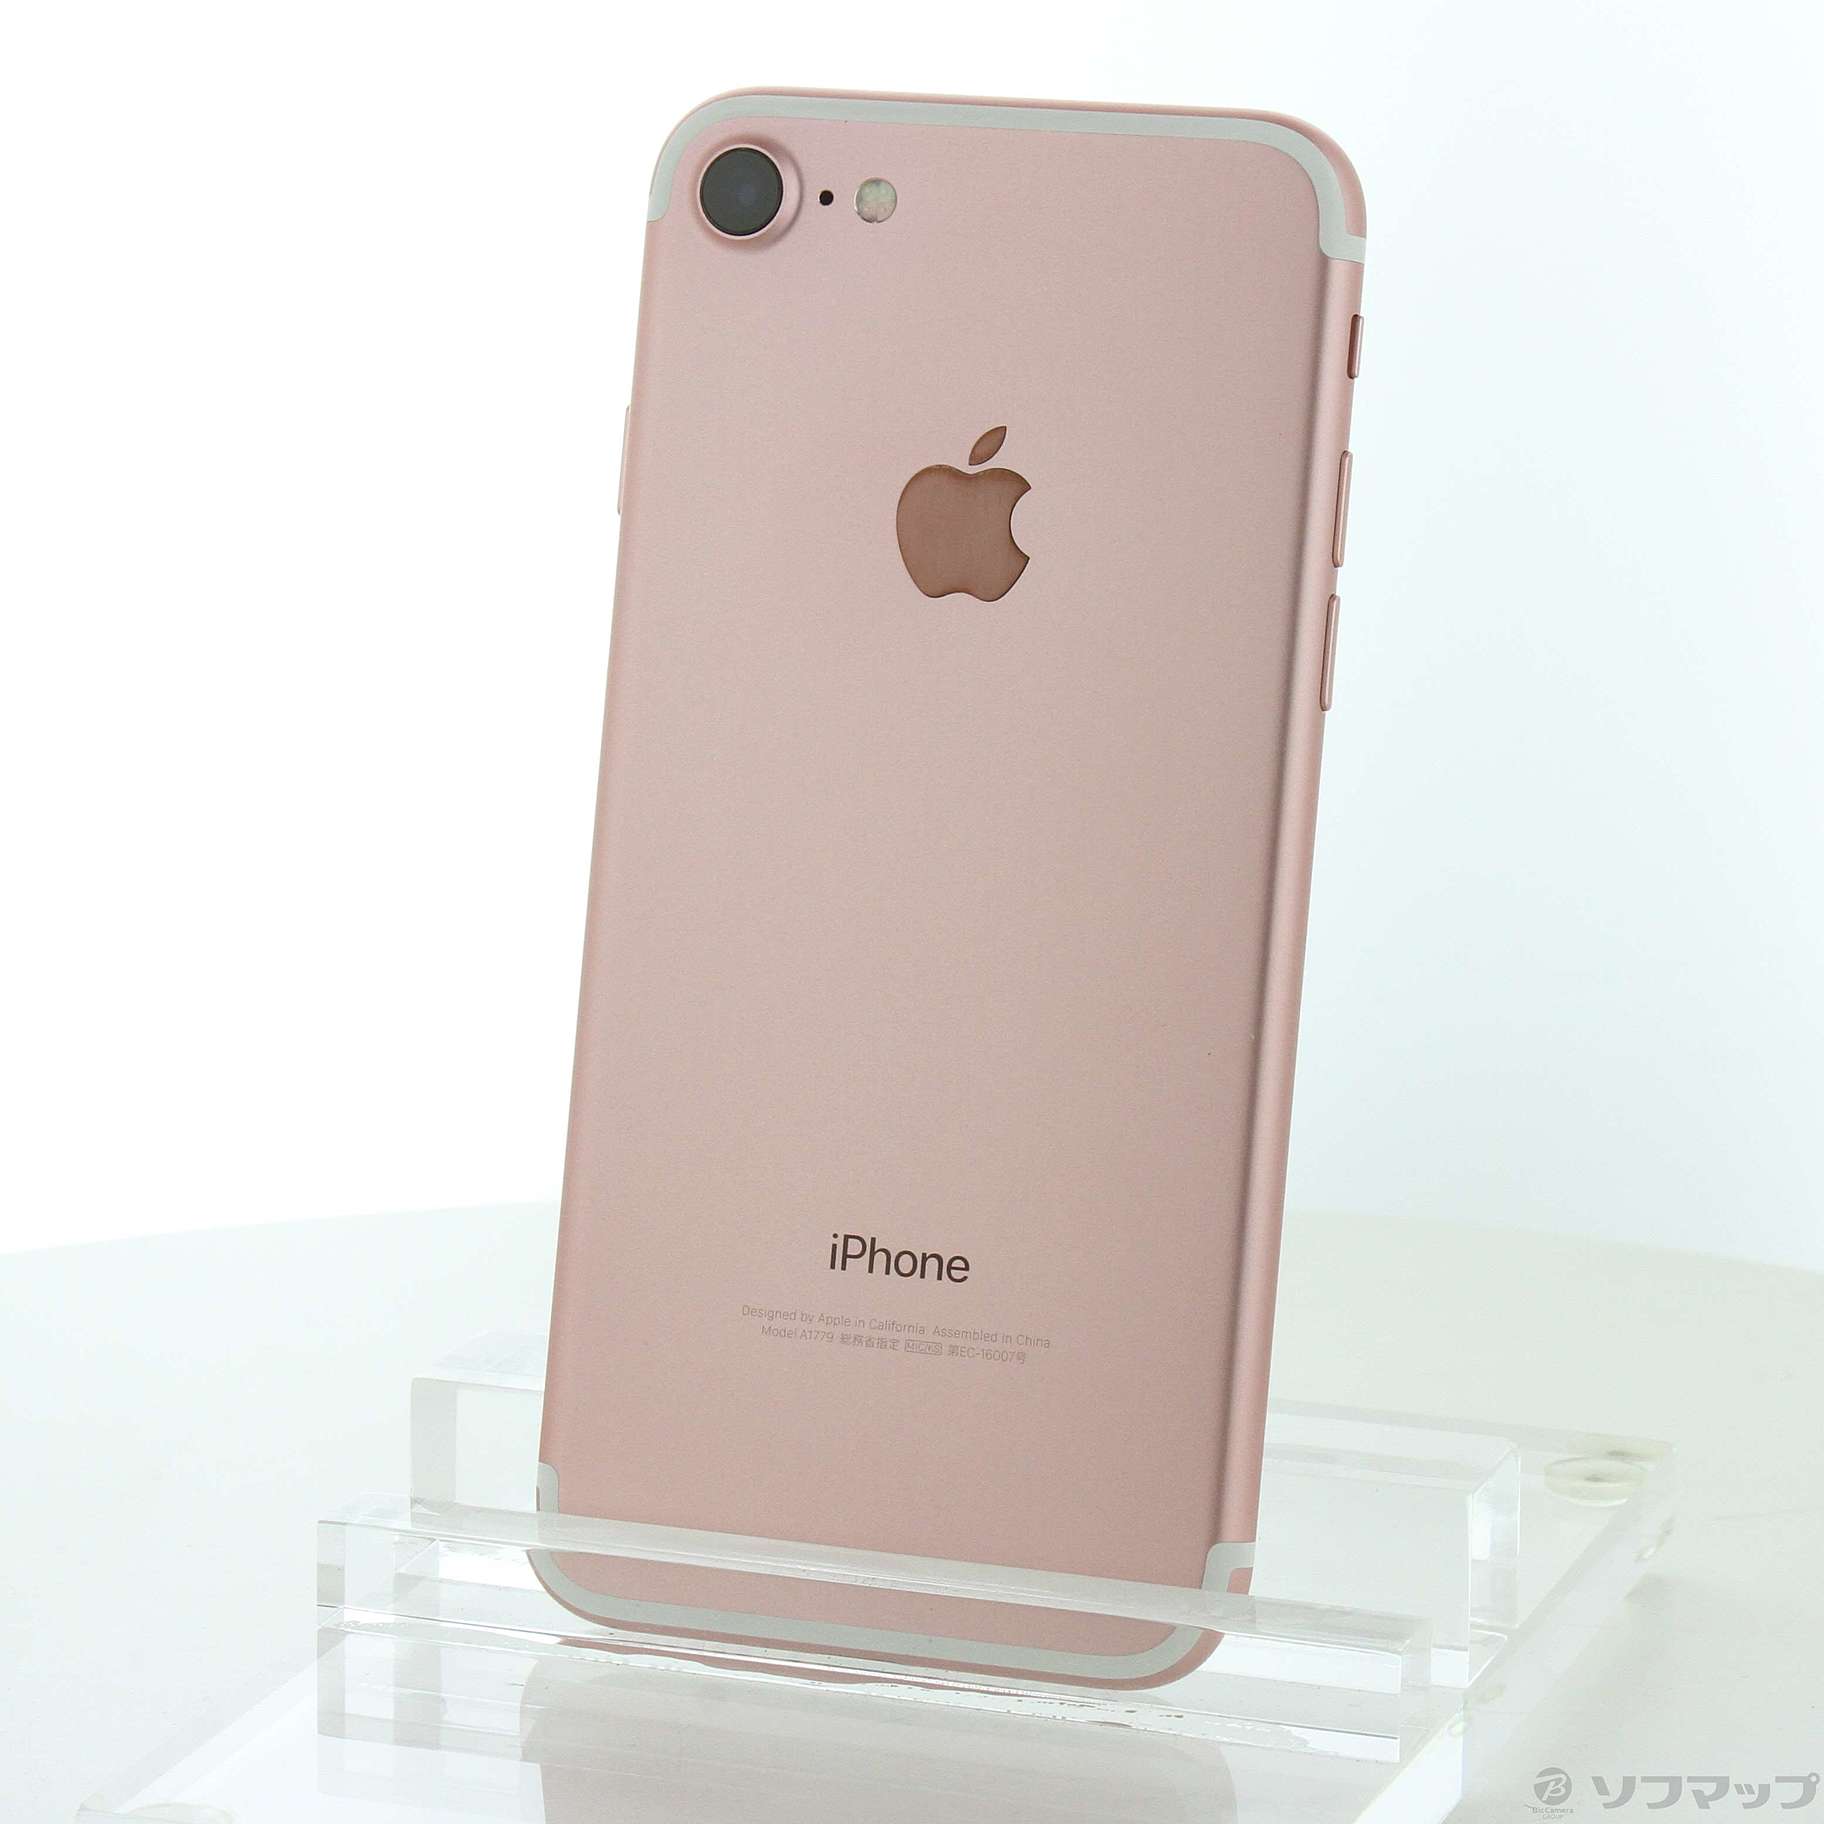 iPhone Gold 32 GB Softbank